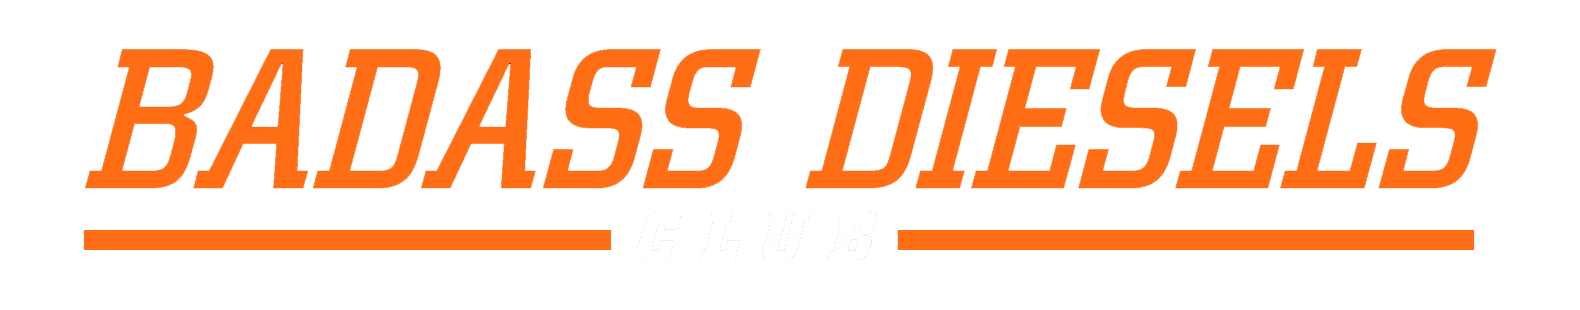 Badass Diesels Club logo